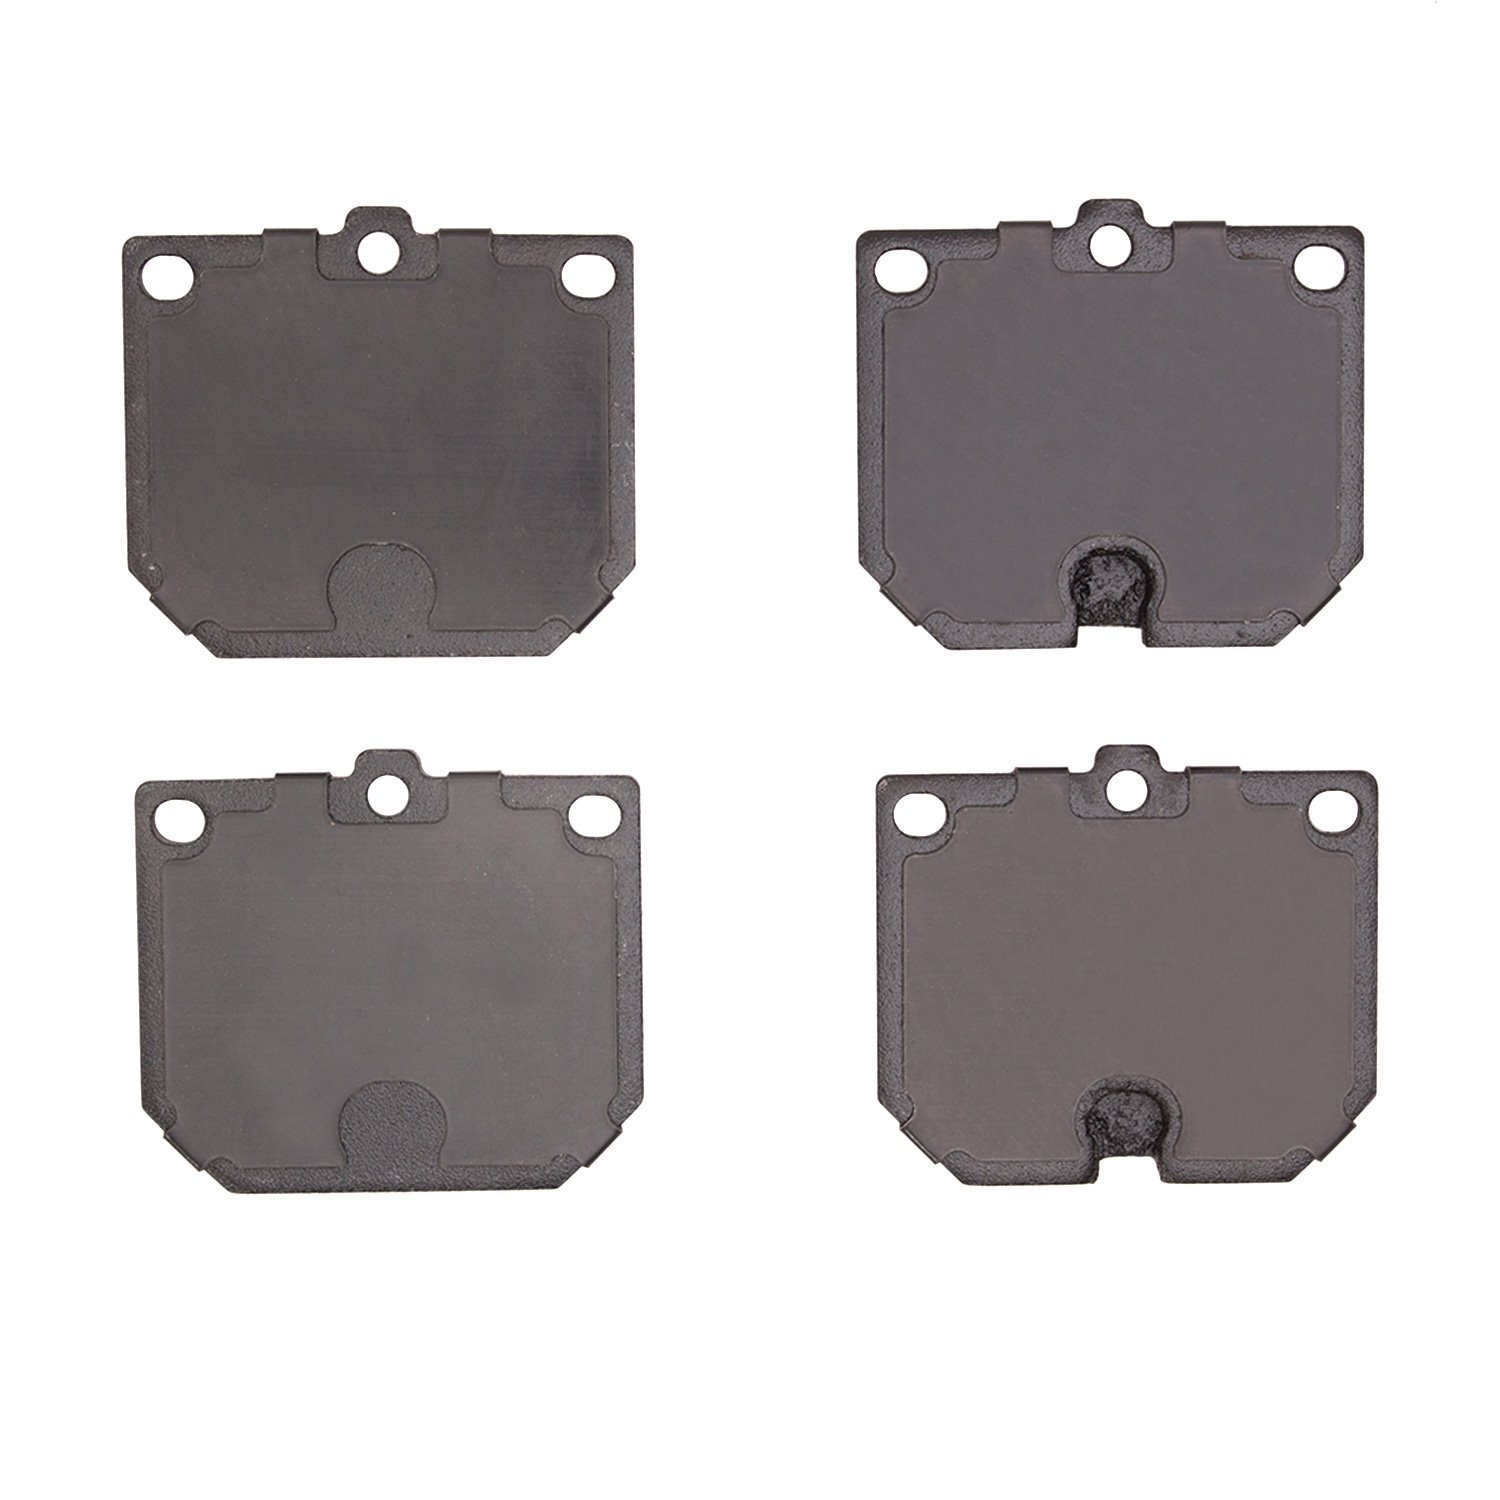 1310-0114-00 3000-Series Ceramic Brake Pads, 1969-1983 Multiple Makes/Models, Position: Front